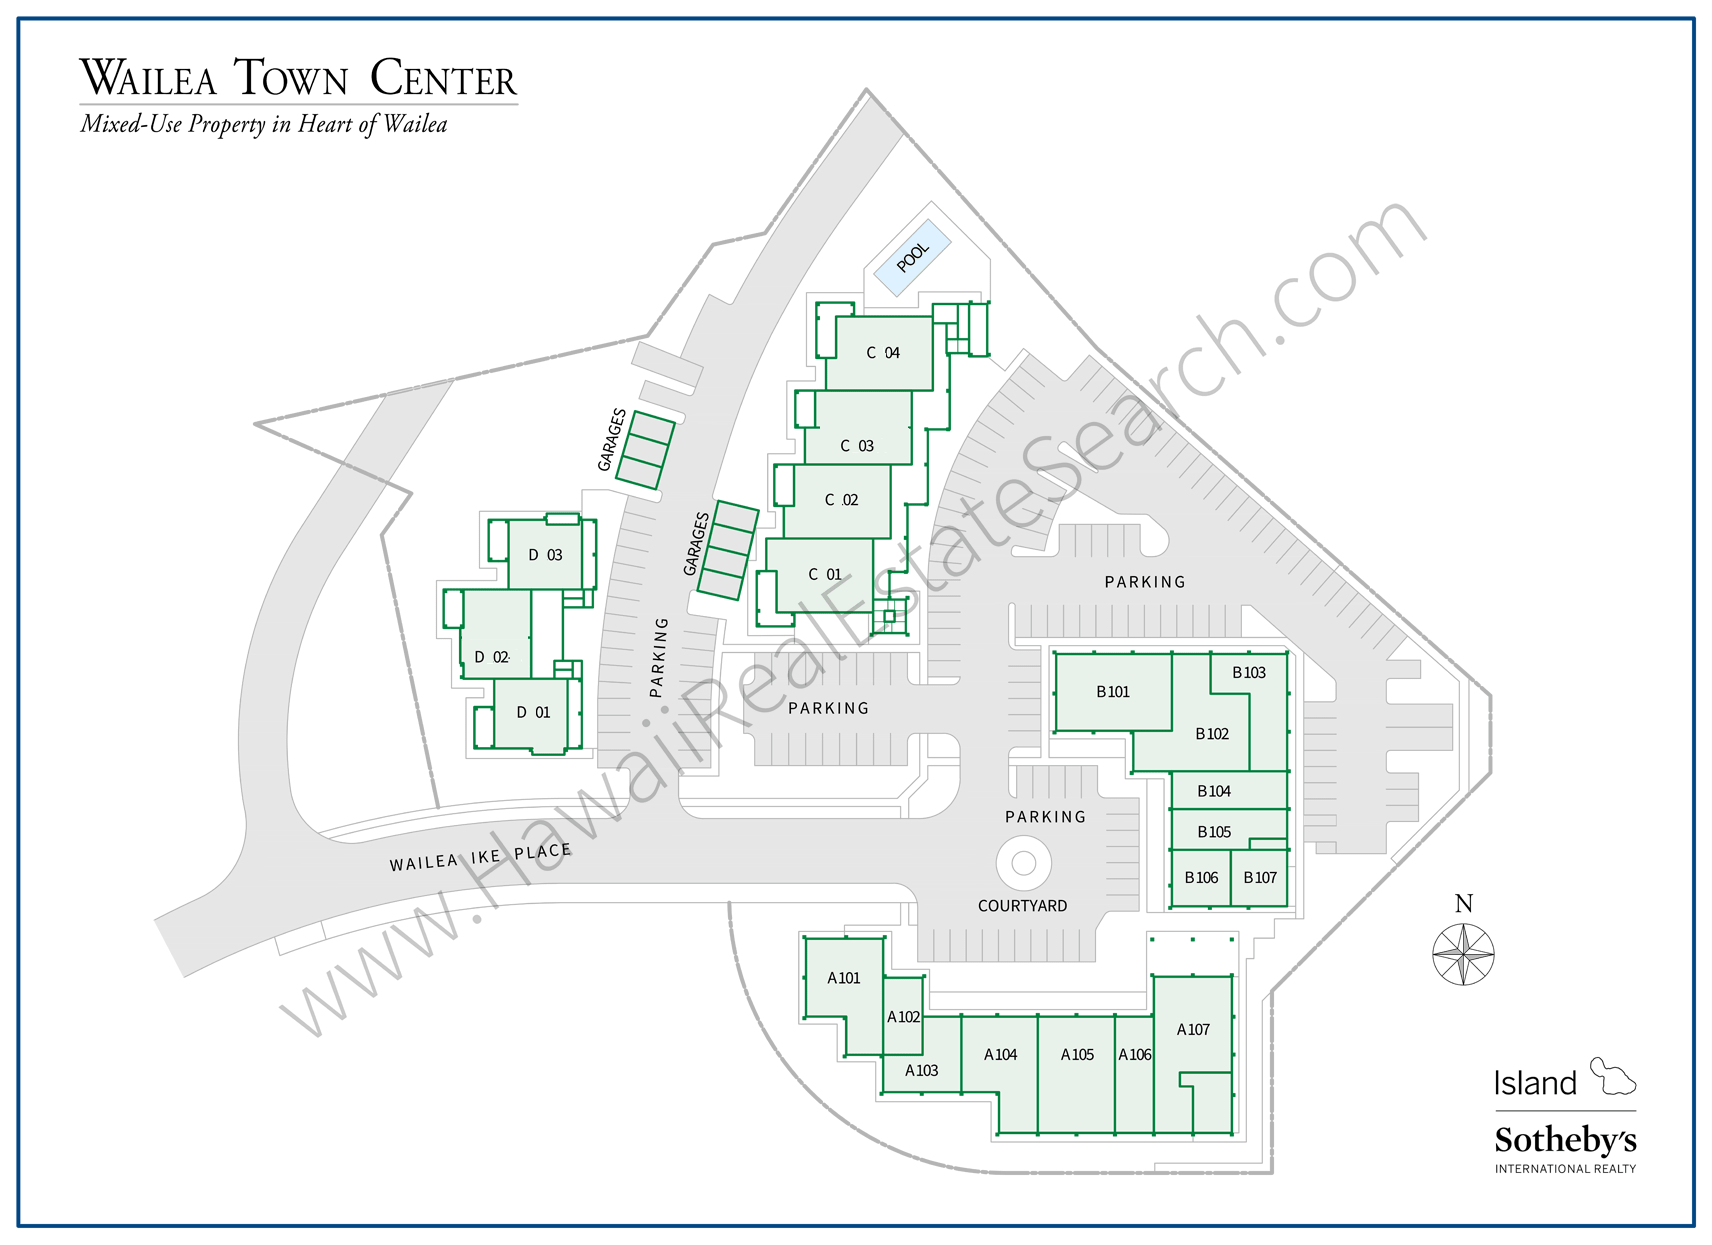 Wailea Town Center Property Map 2018